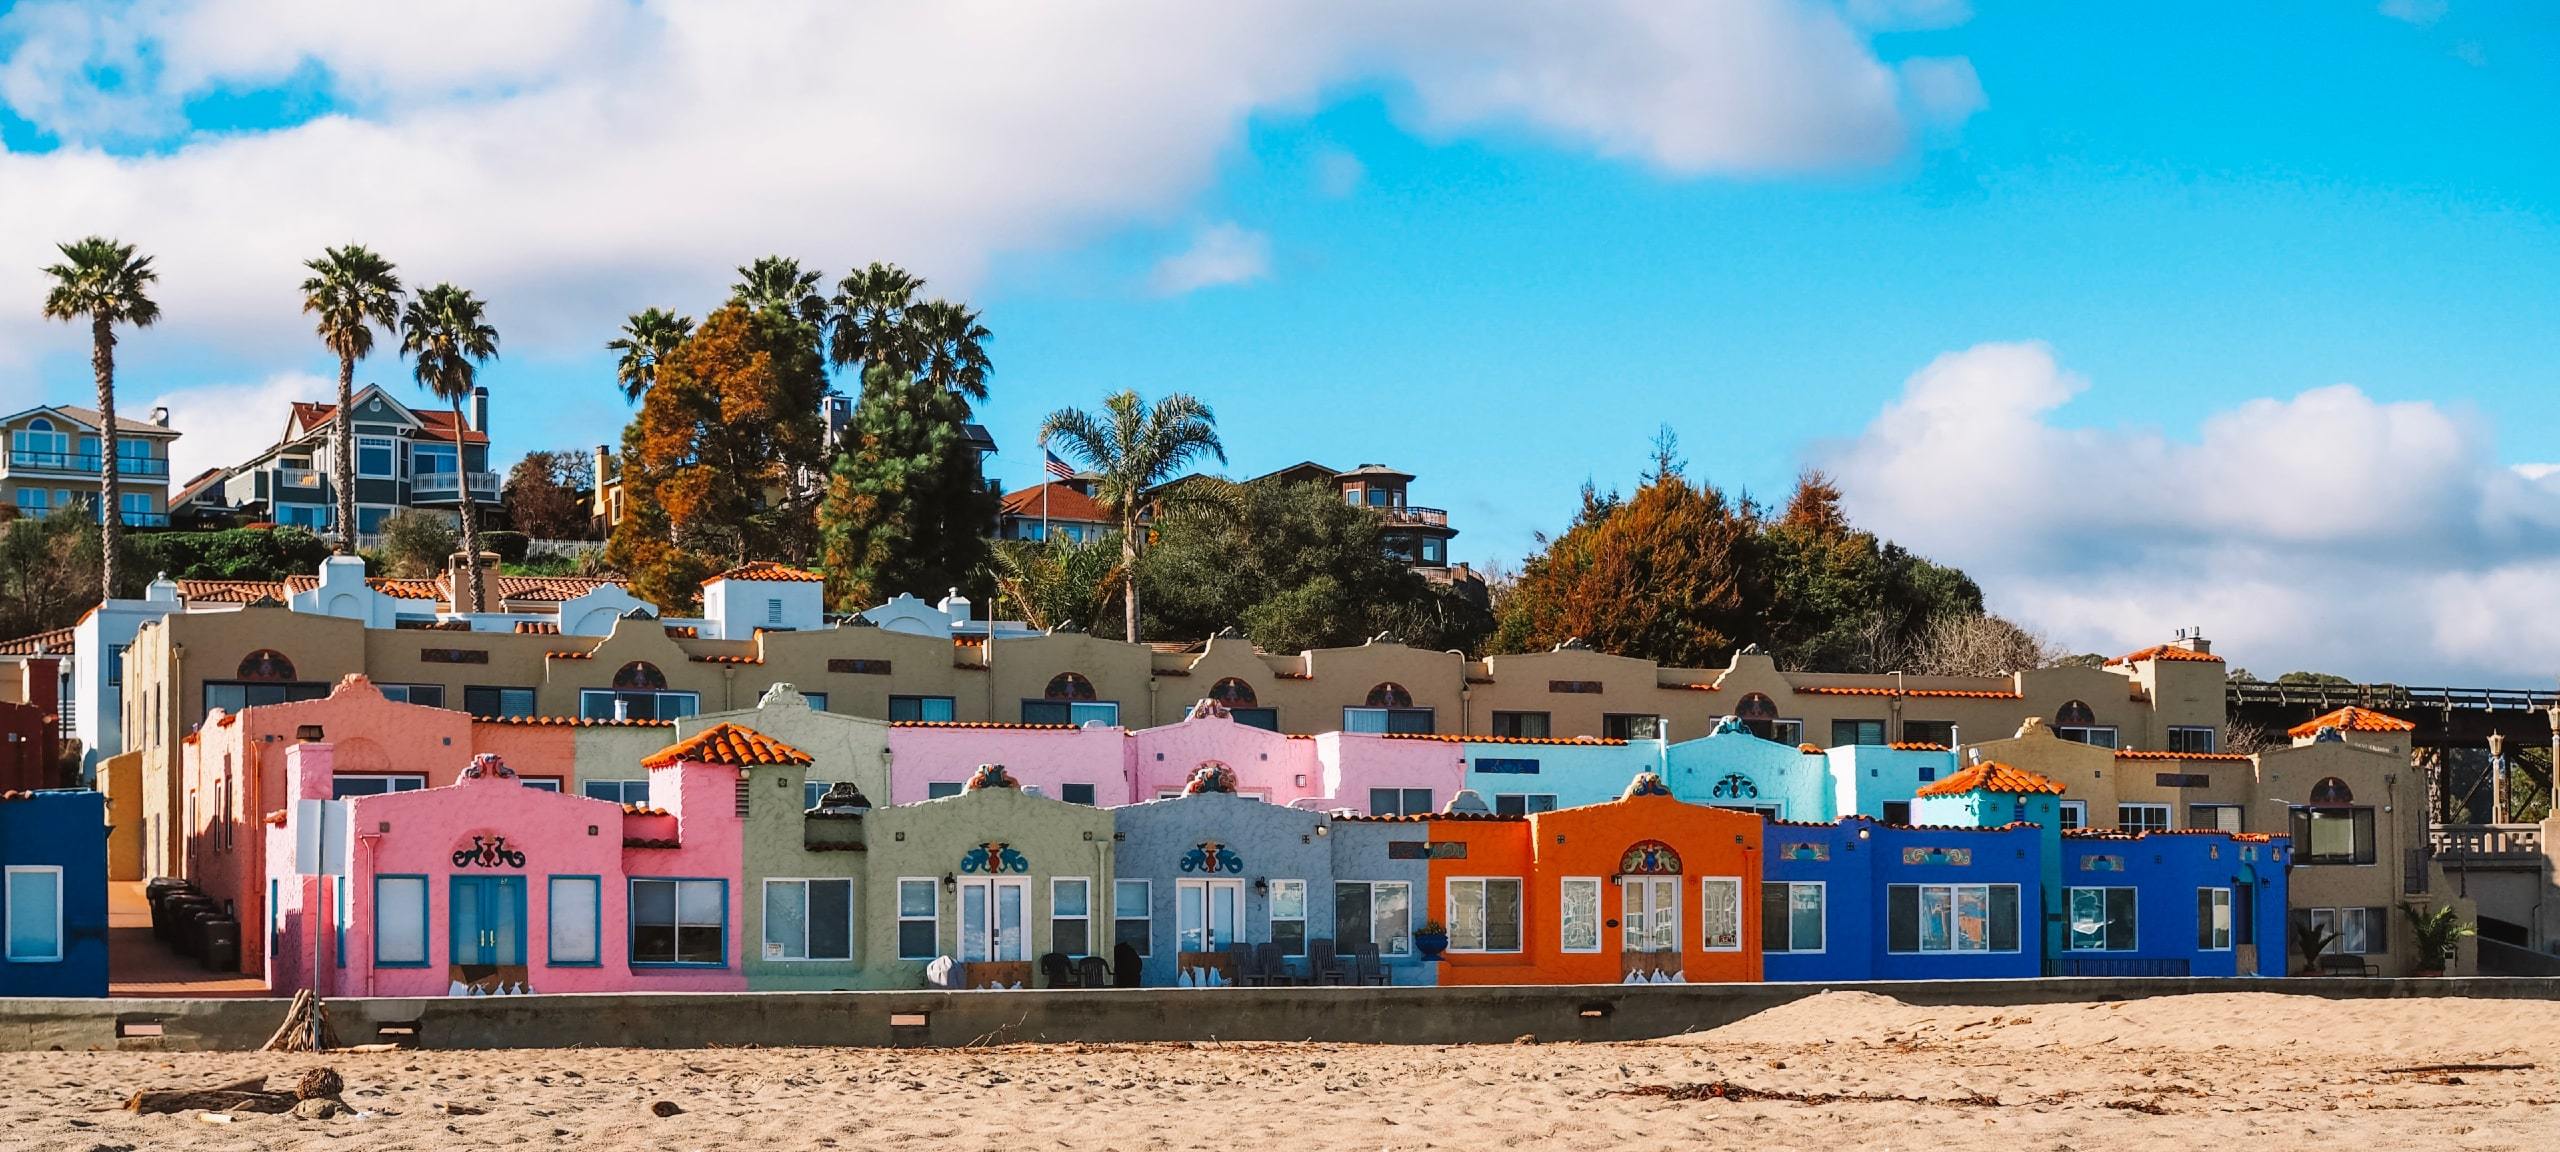 Colorful beach homes in Capitola, Santa Cruz County